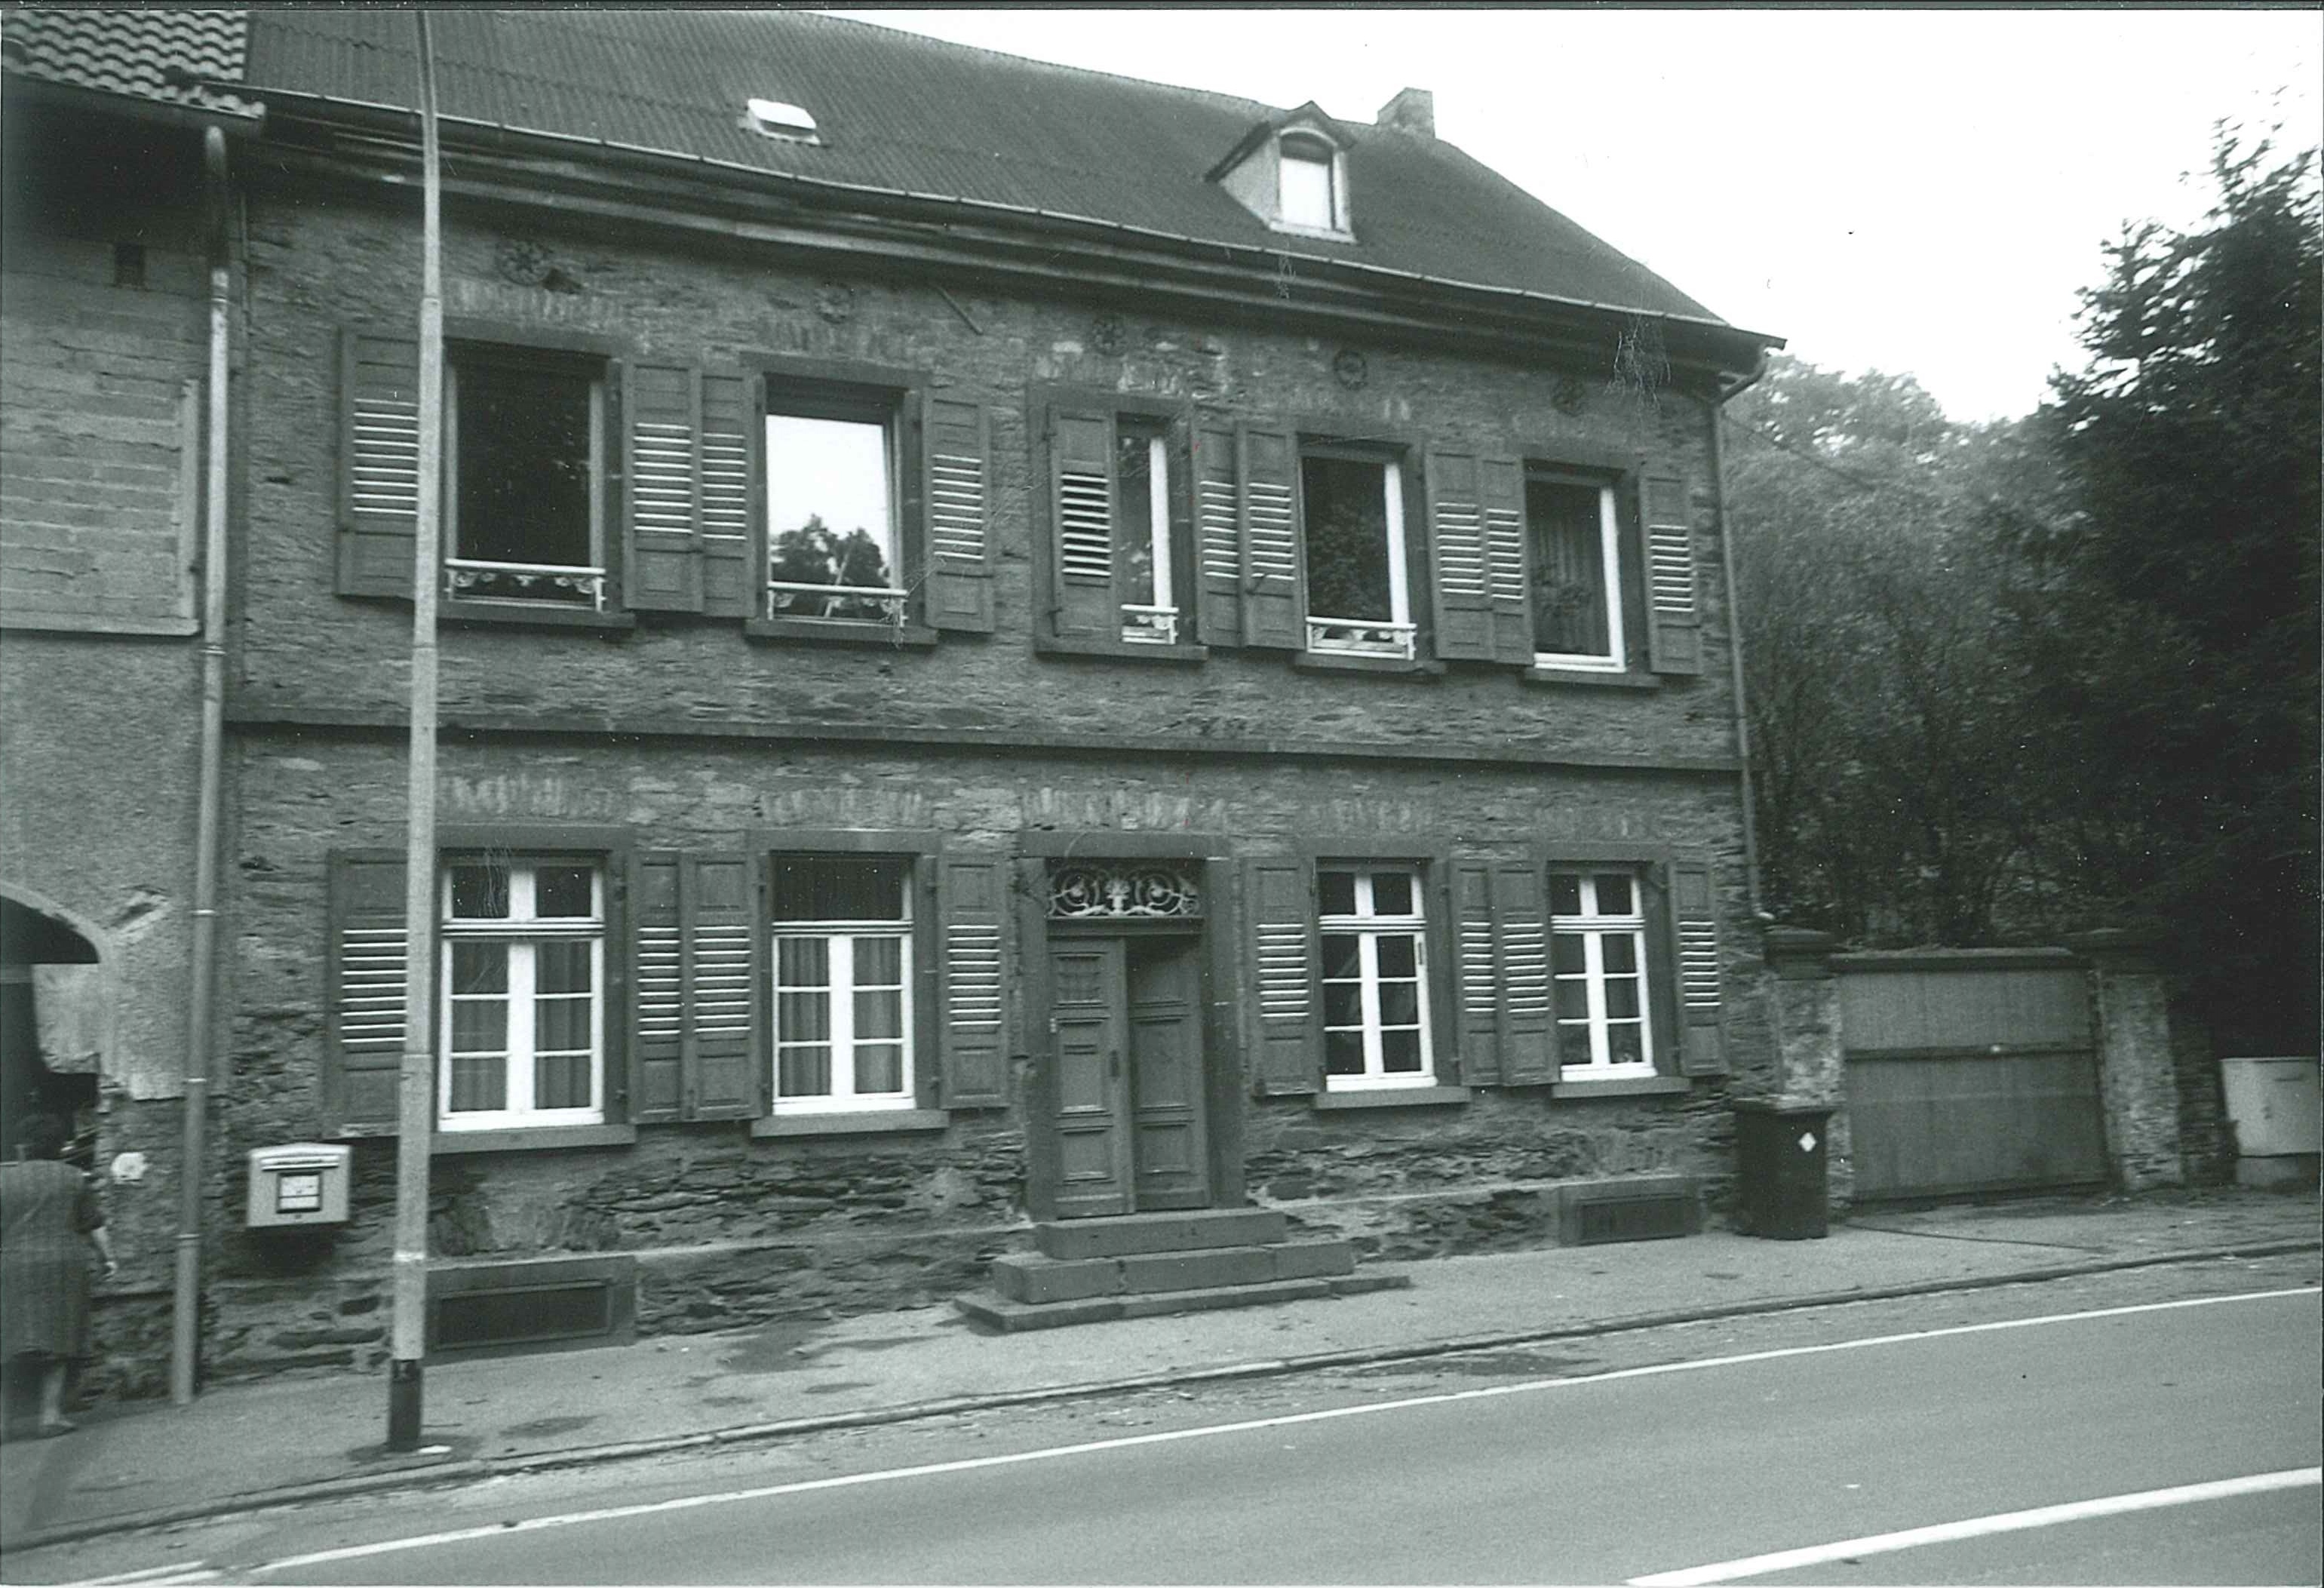 Koblenz-Opler-Straße, Bendorf-Sayn, 1992 (REM CC BY-NC-SA)